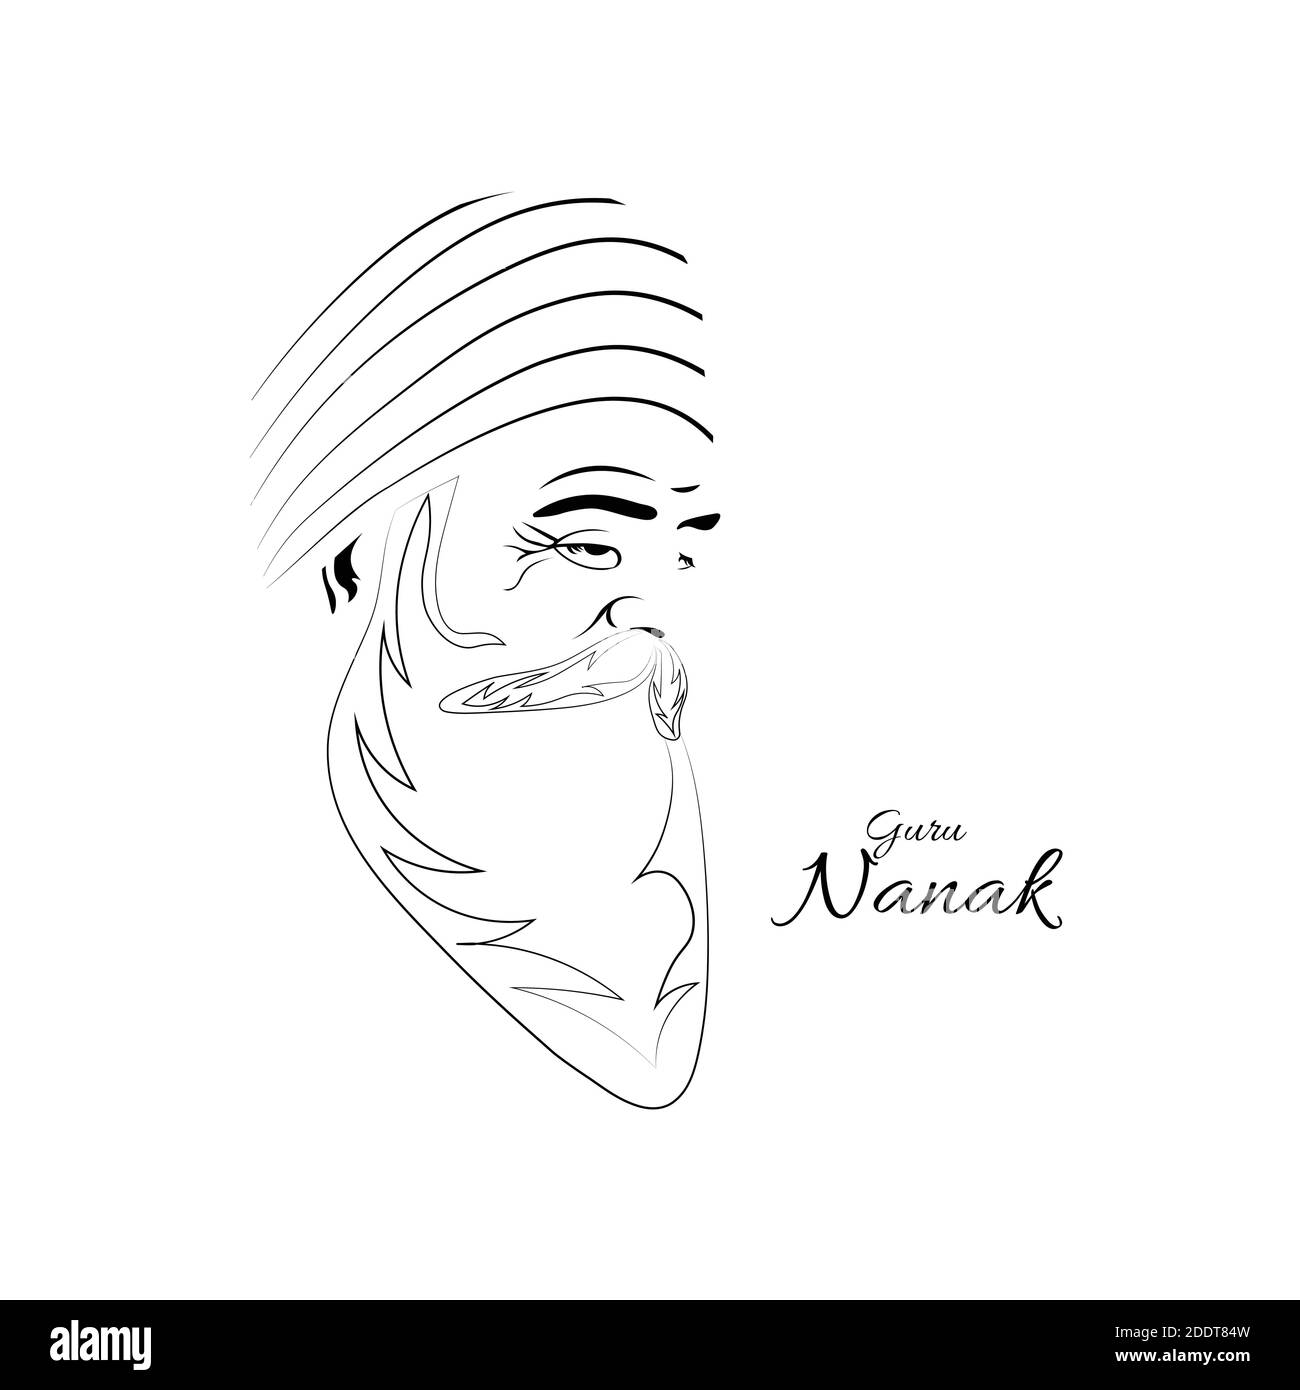 Vector Illustration for Guru Nanak Jayanti the birth anniversary ...